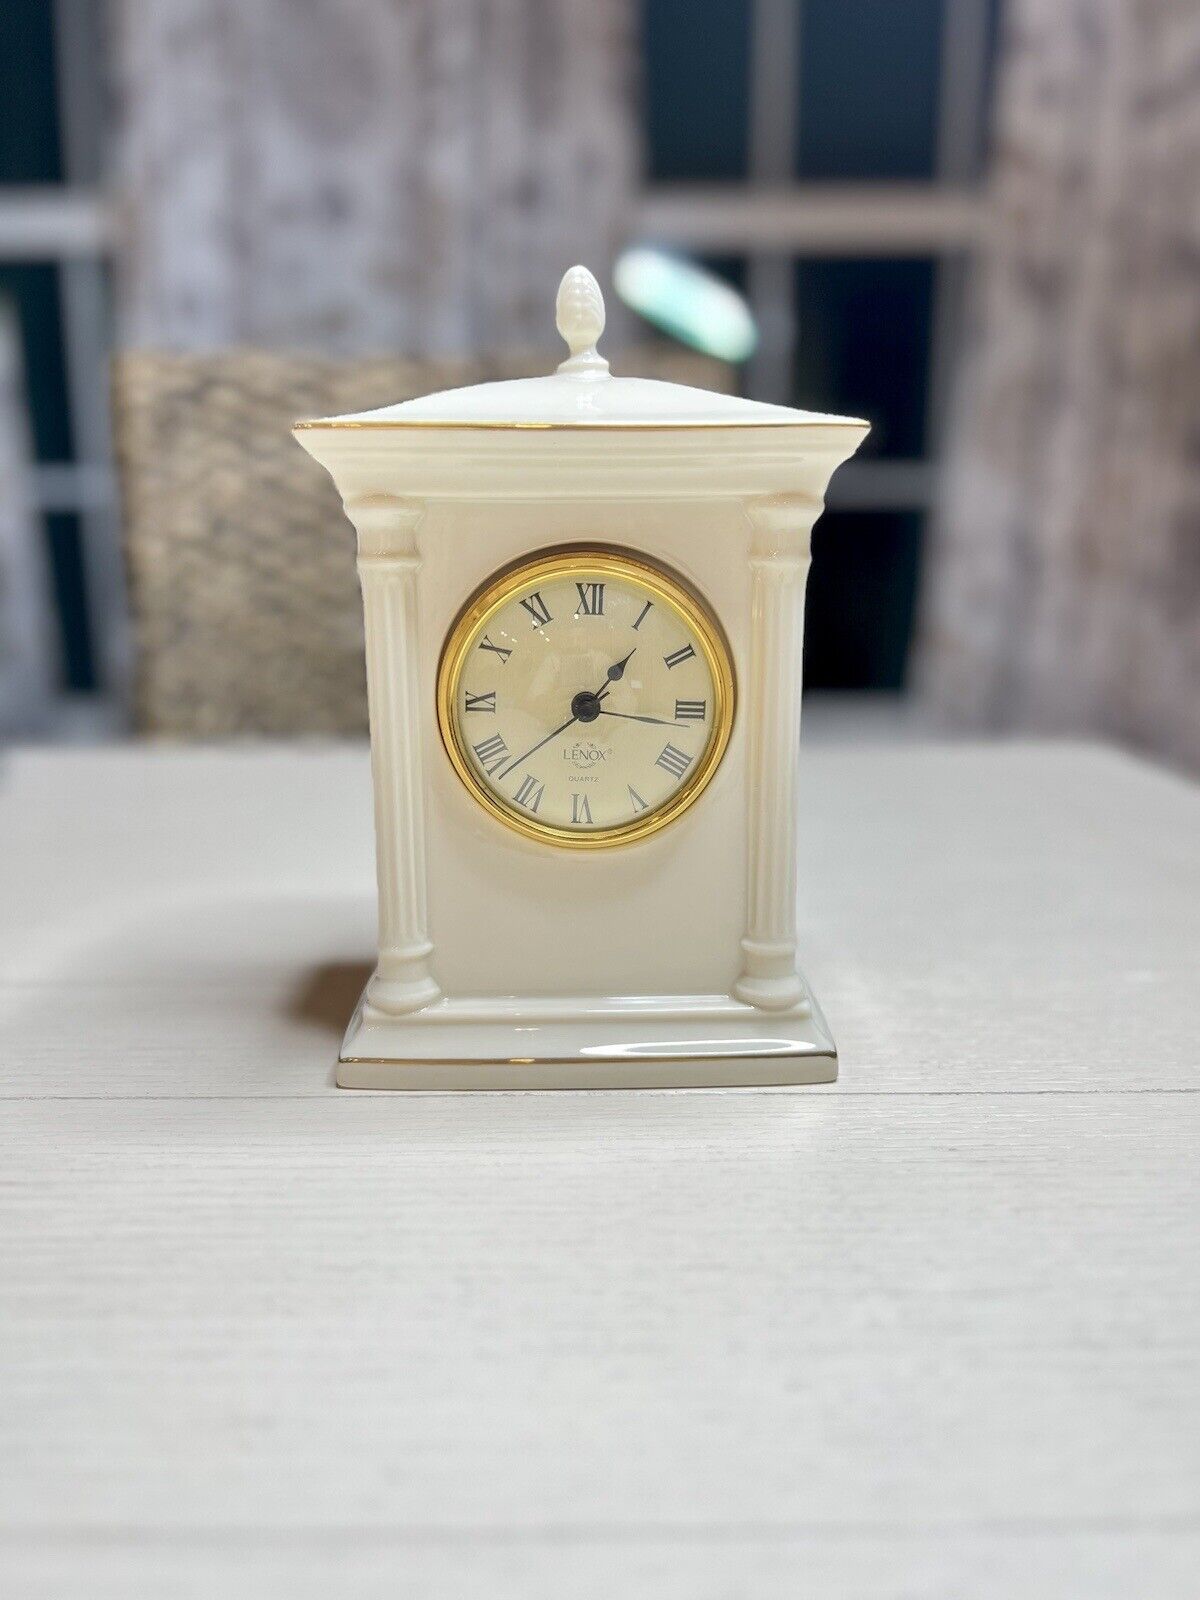 Regal Lenox Quartz Mantel Clock with Gold Trim 6.5” High x 2.75” wide